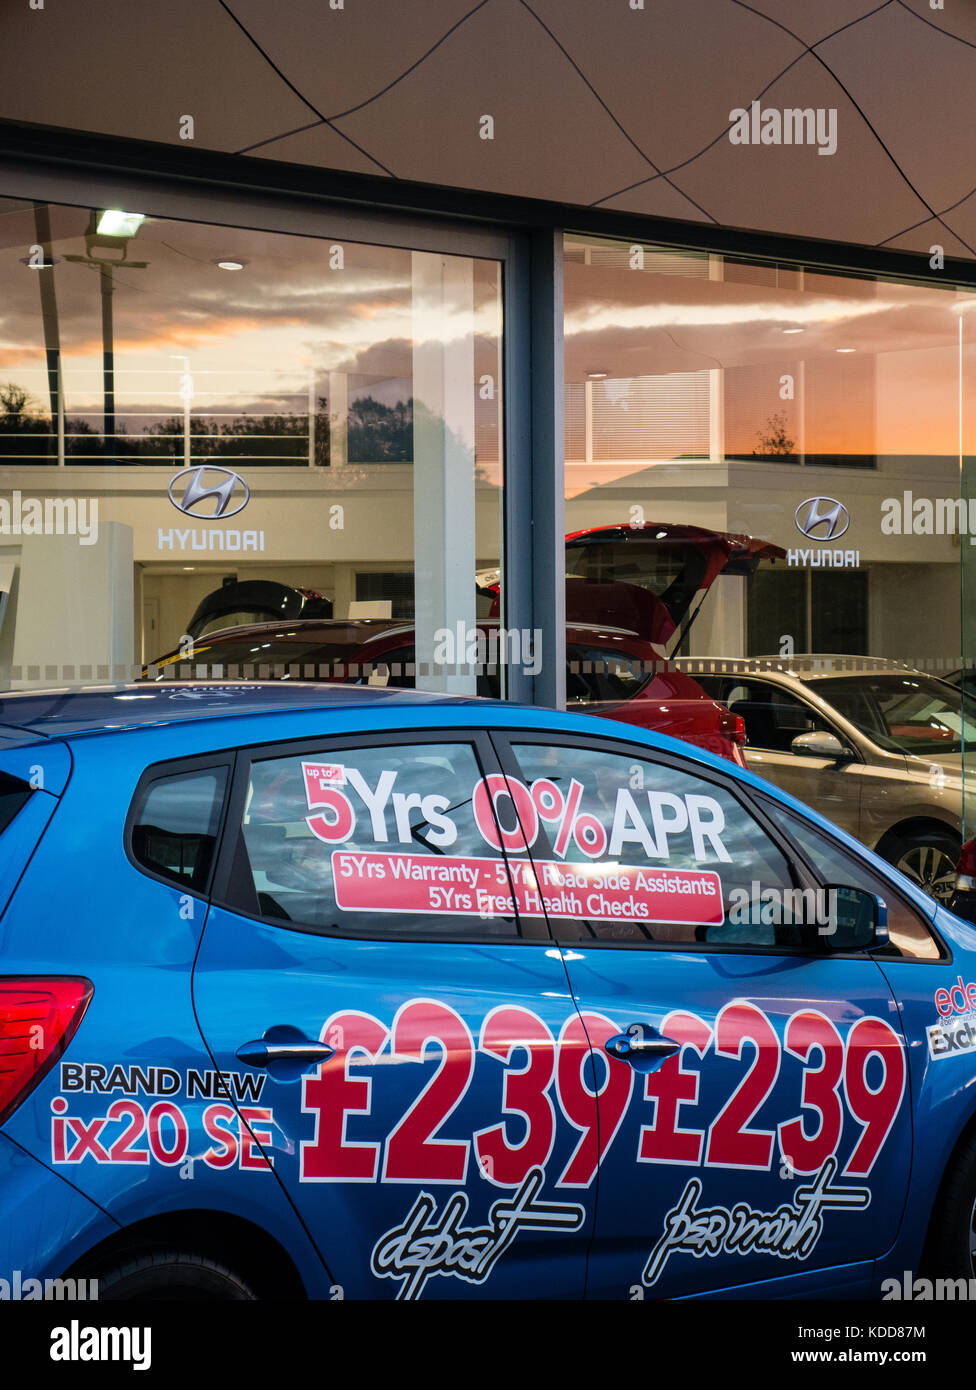 Hyundai Dealership, Car Showroom, Reading, Berkshire, England Stock Photo